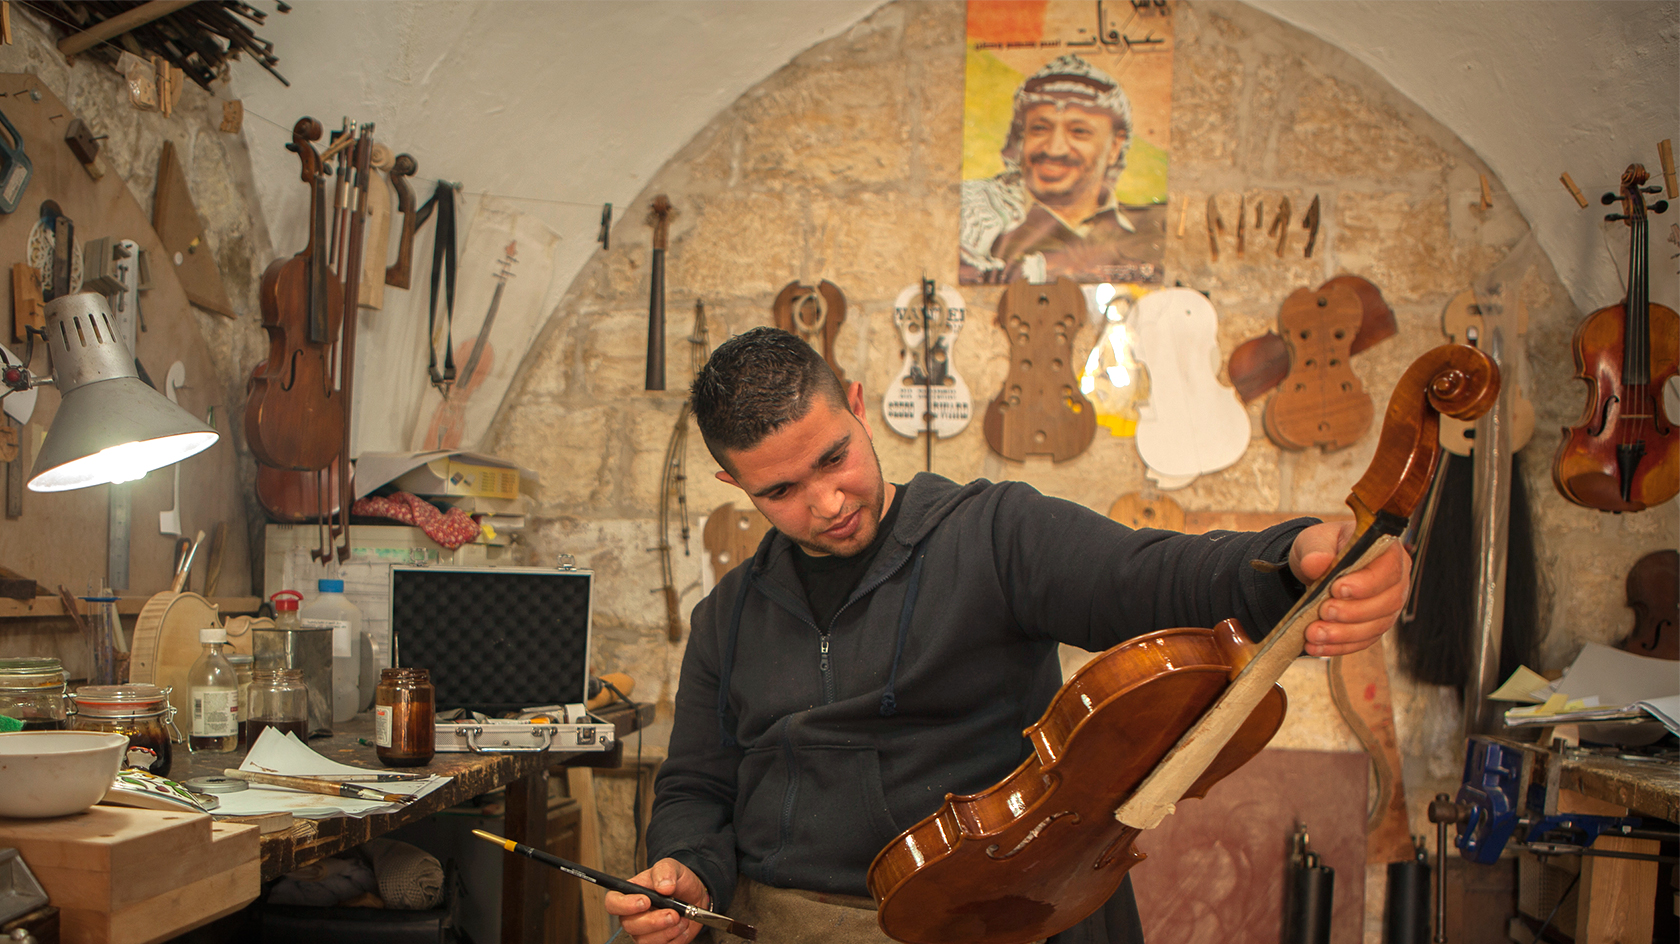 Crafting beautiful music in Palestine